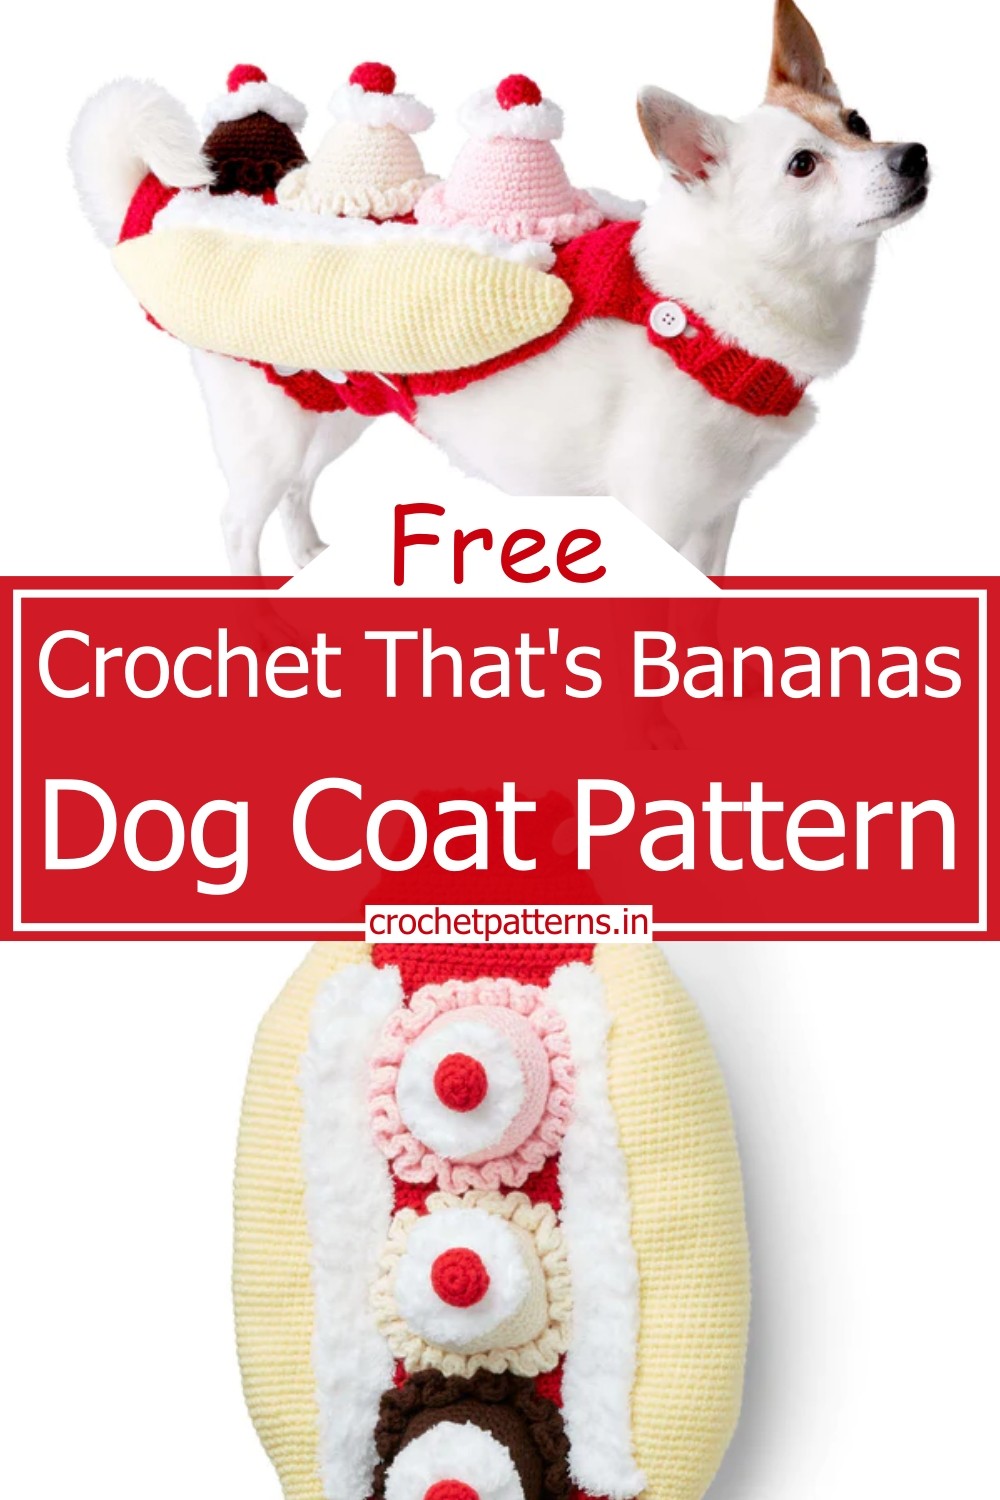 Crochet That's Bananas Dog Coat Pattern